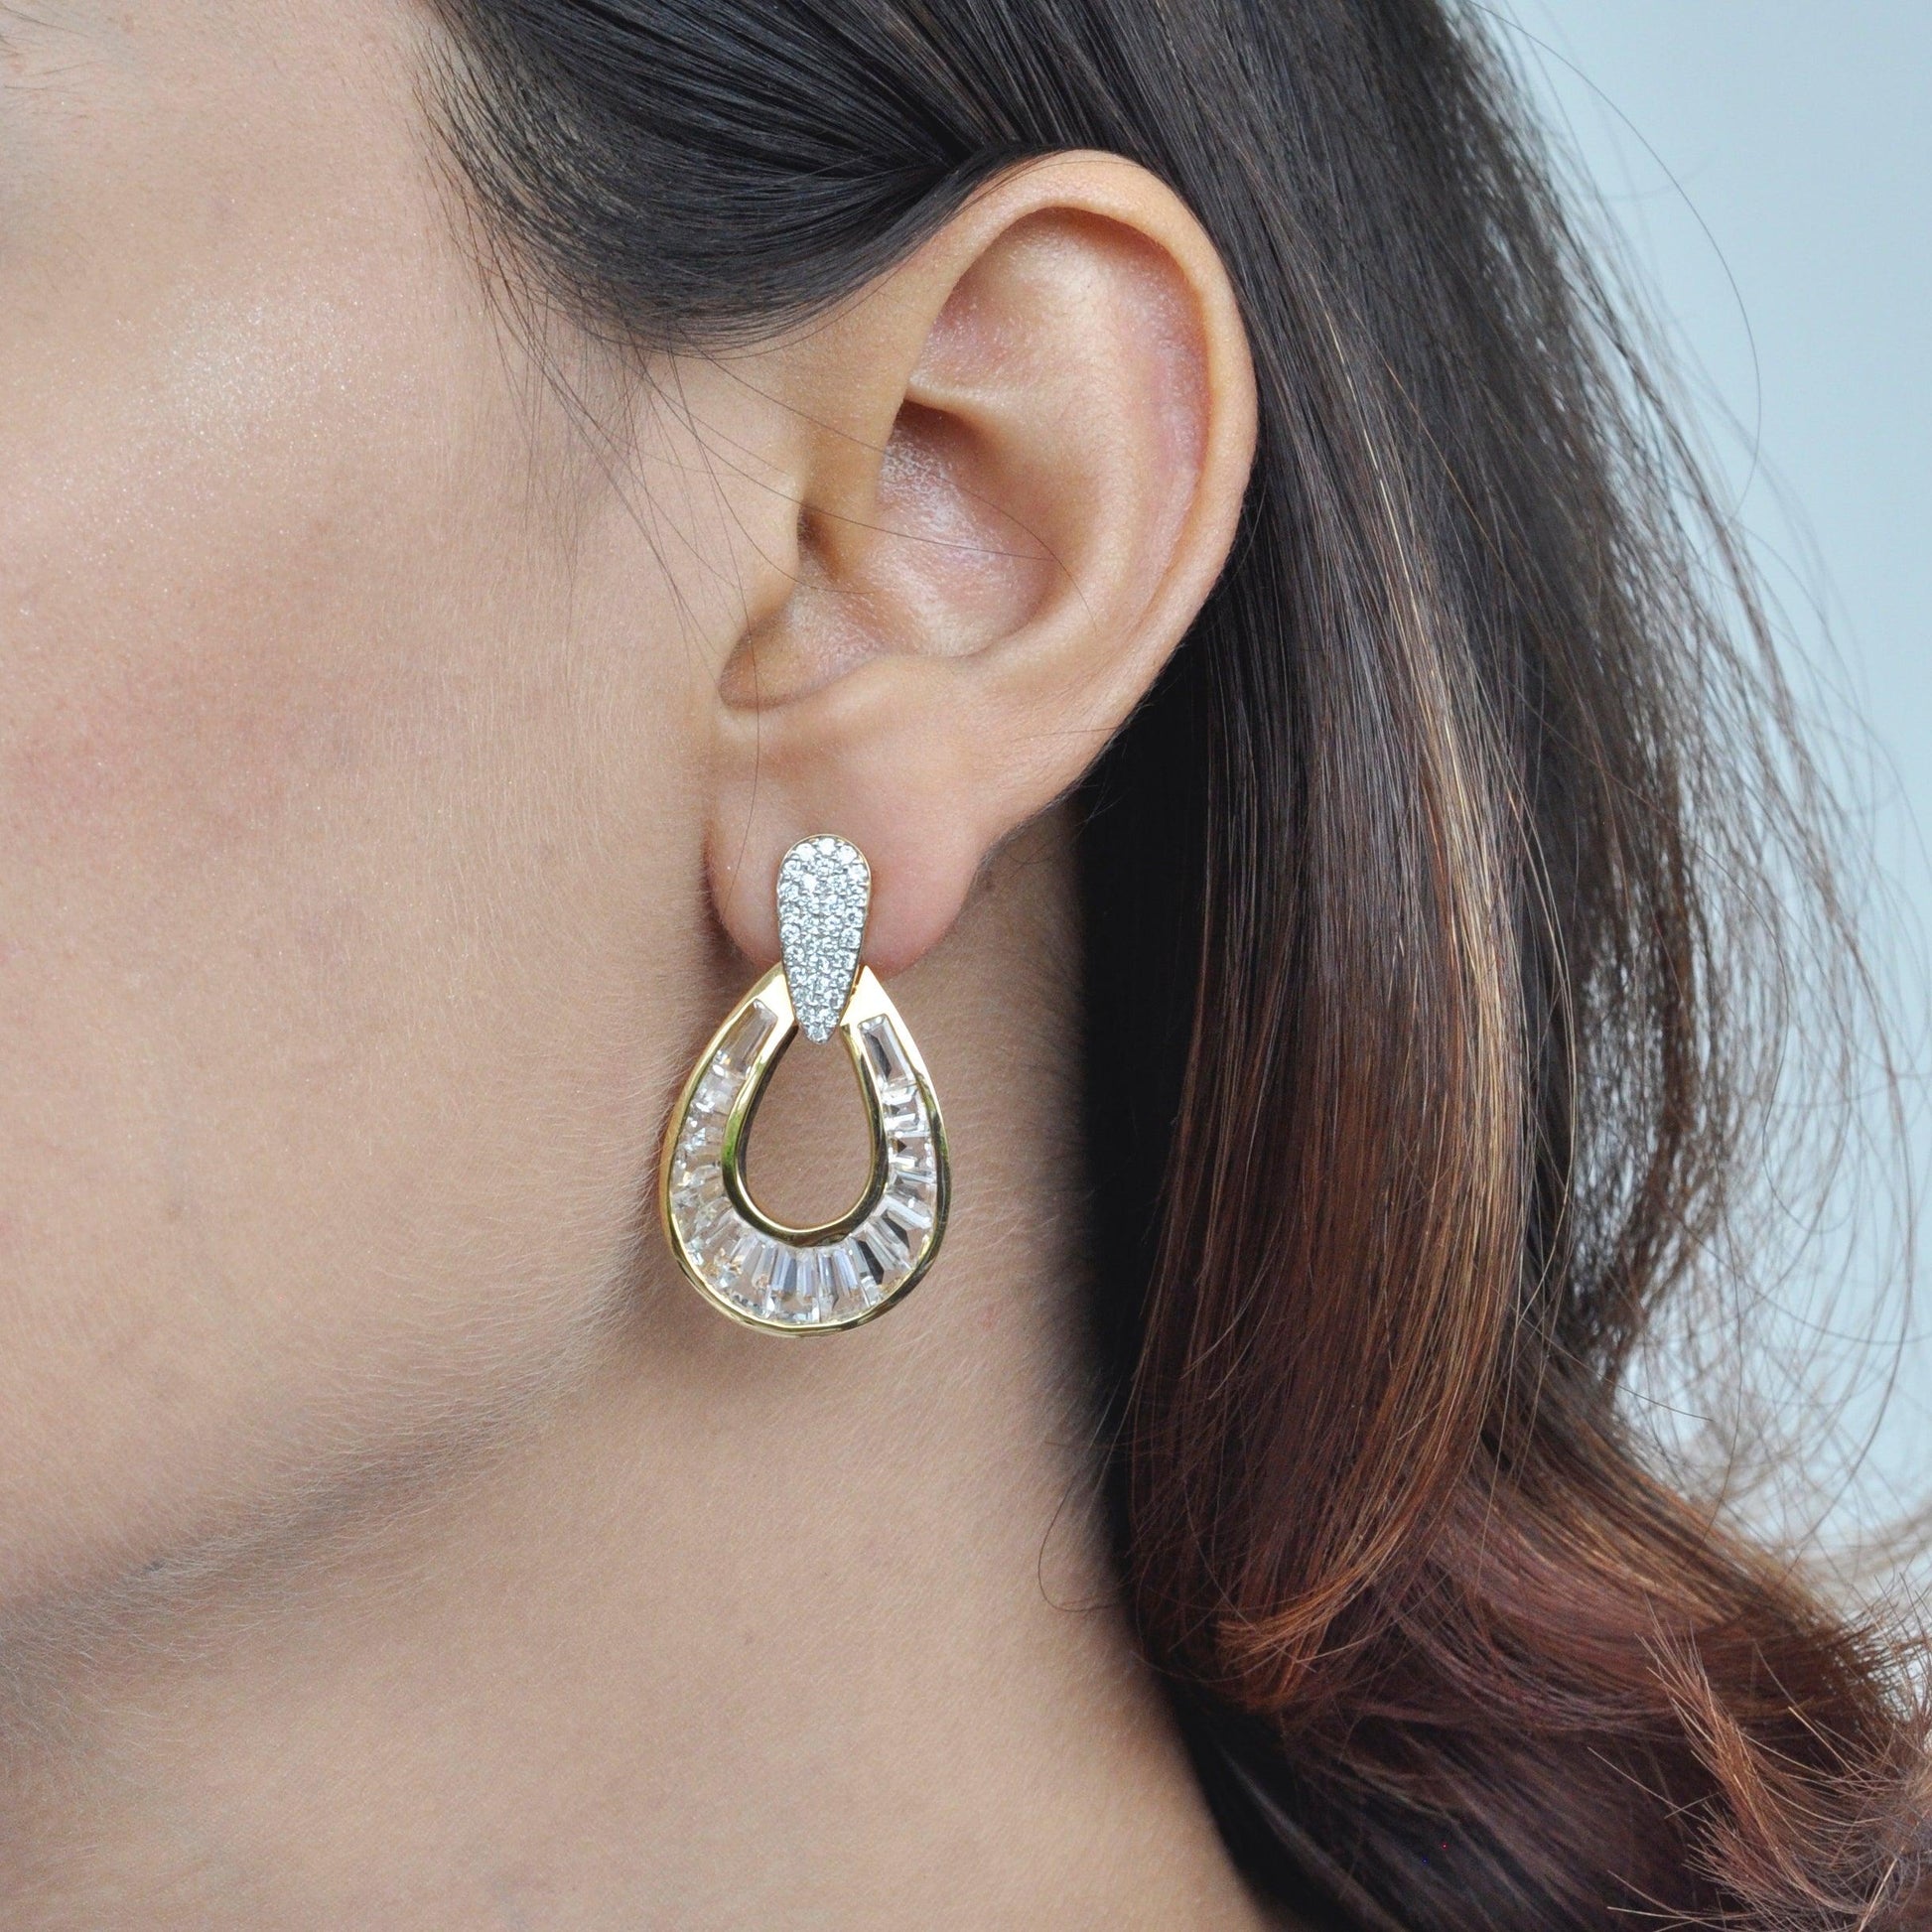 high-quality  diamond earrings with topaz